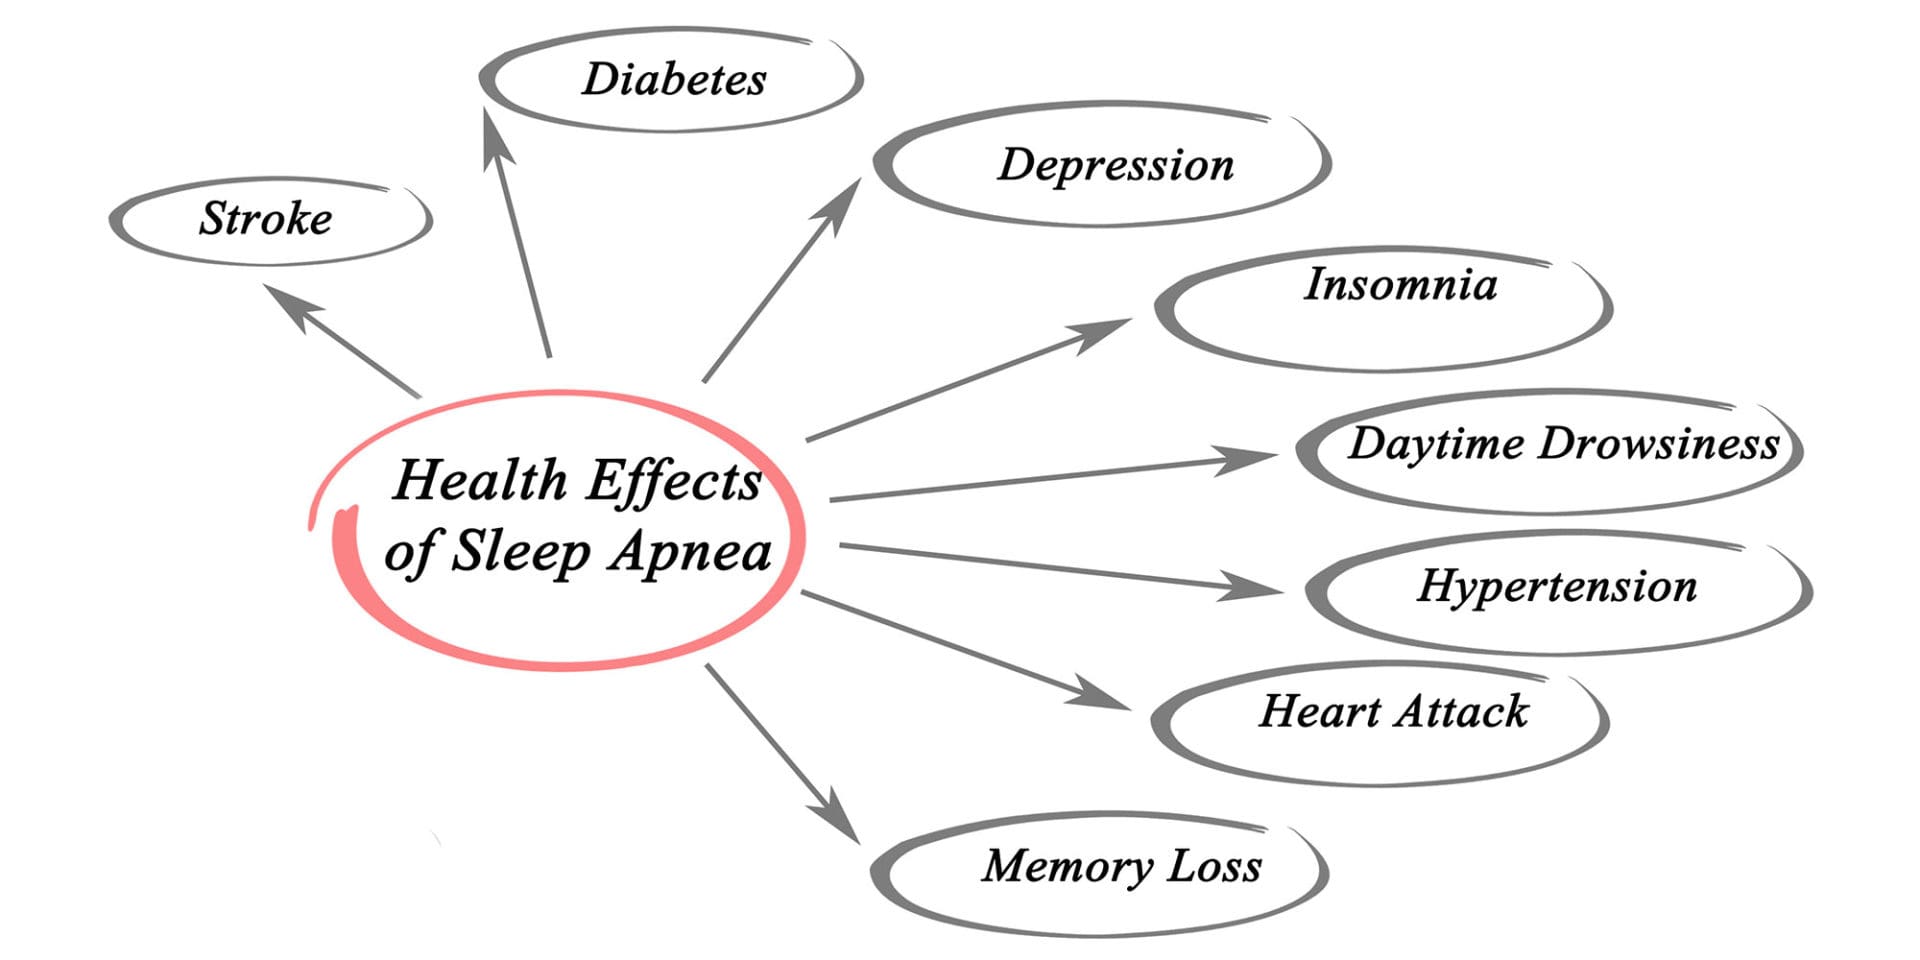 Sleep Apnea: Finding a Natural Remedy for Sleep Apnea - Does CBD Hep?